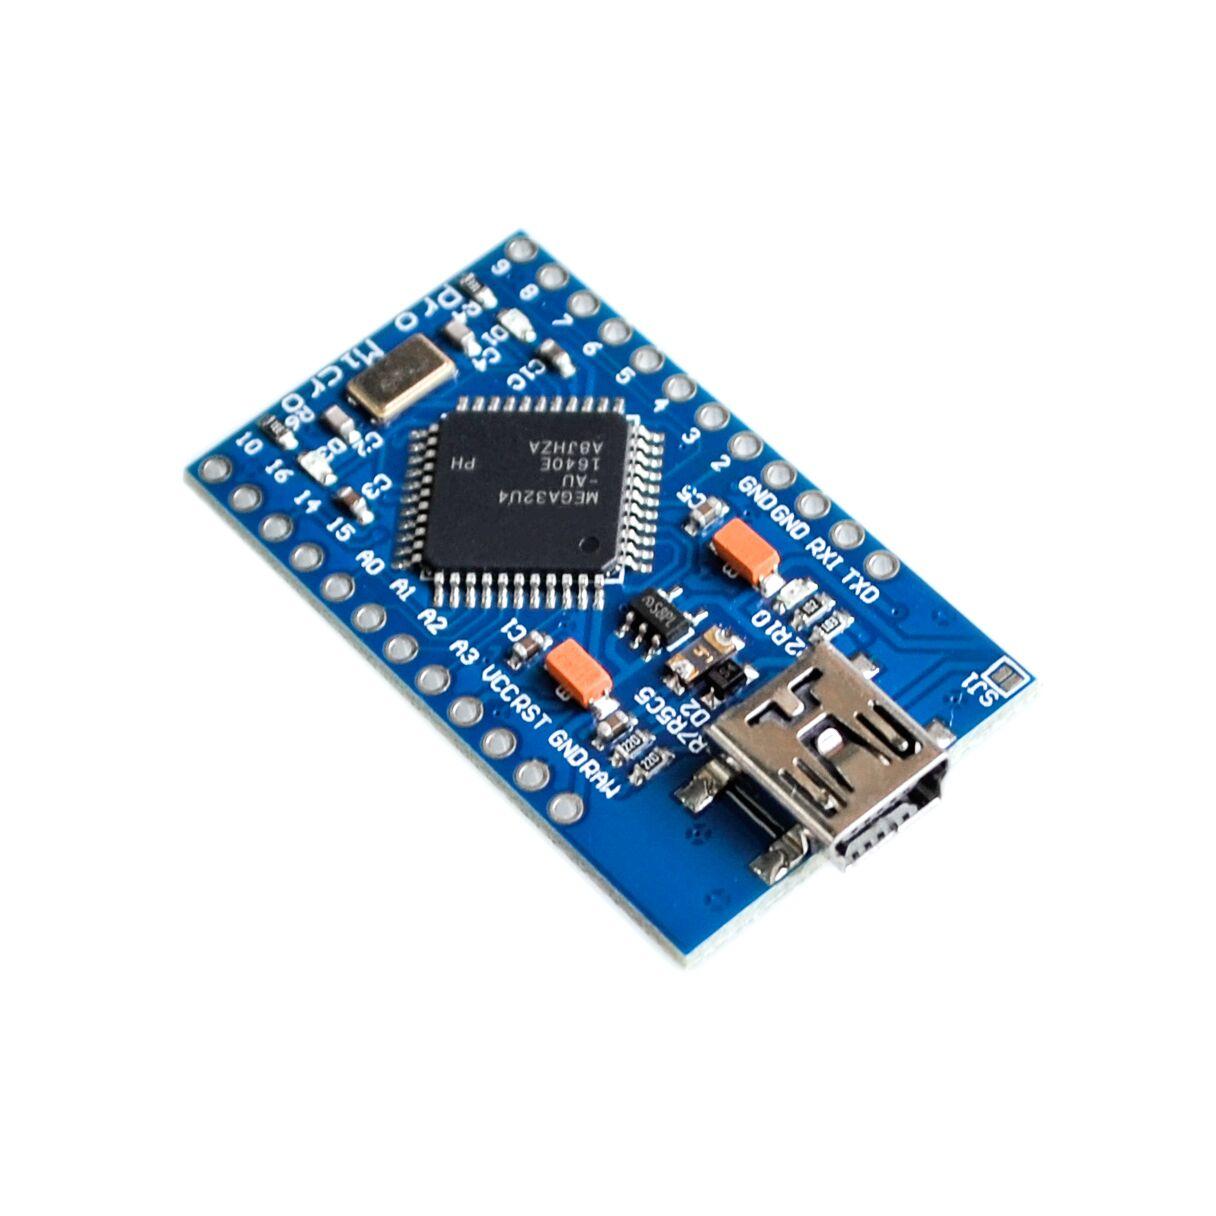 Mini-USB-ATmega32U4-Pro-Micro-5V-16MHz-Board-Module-For-Arduino-Leonardo-ATMega-32U4-Controller-Pro-Micro-Replace-Pro-Mini